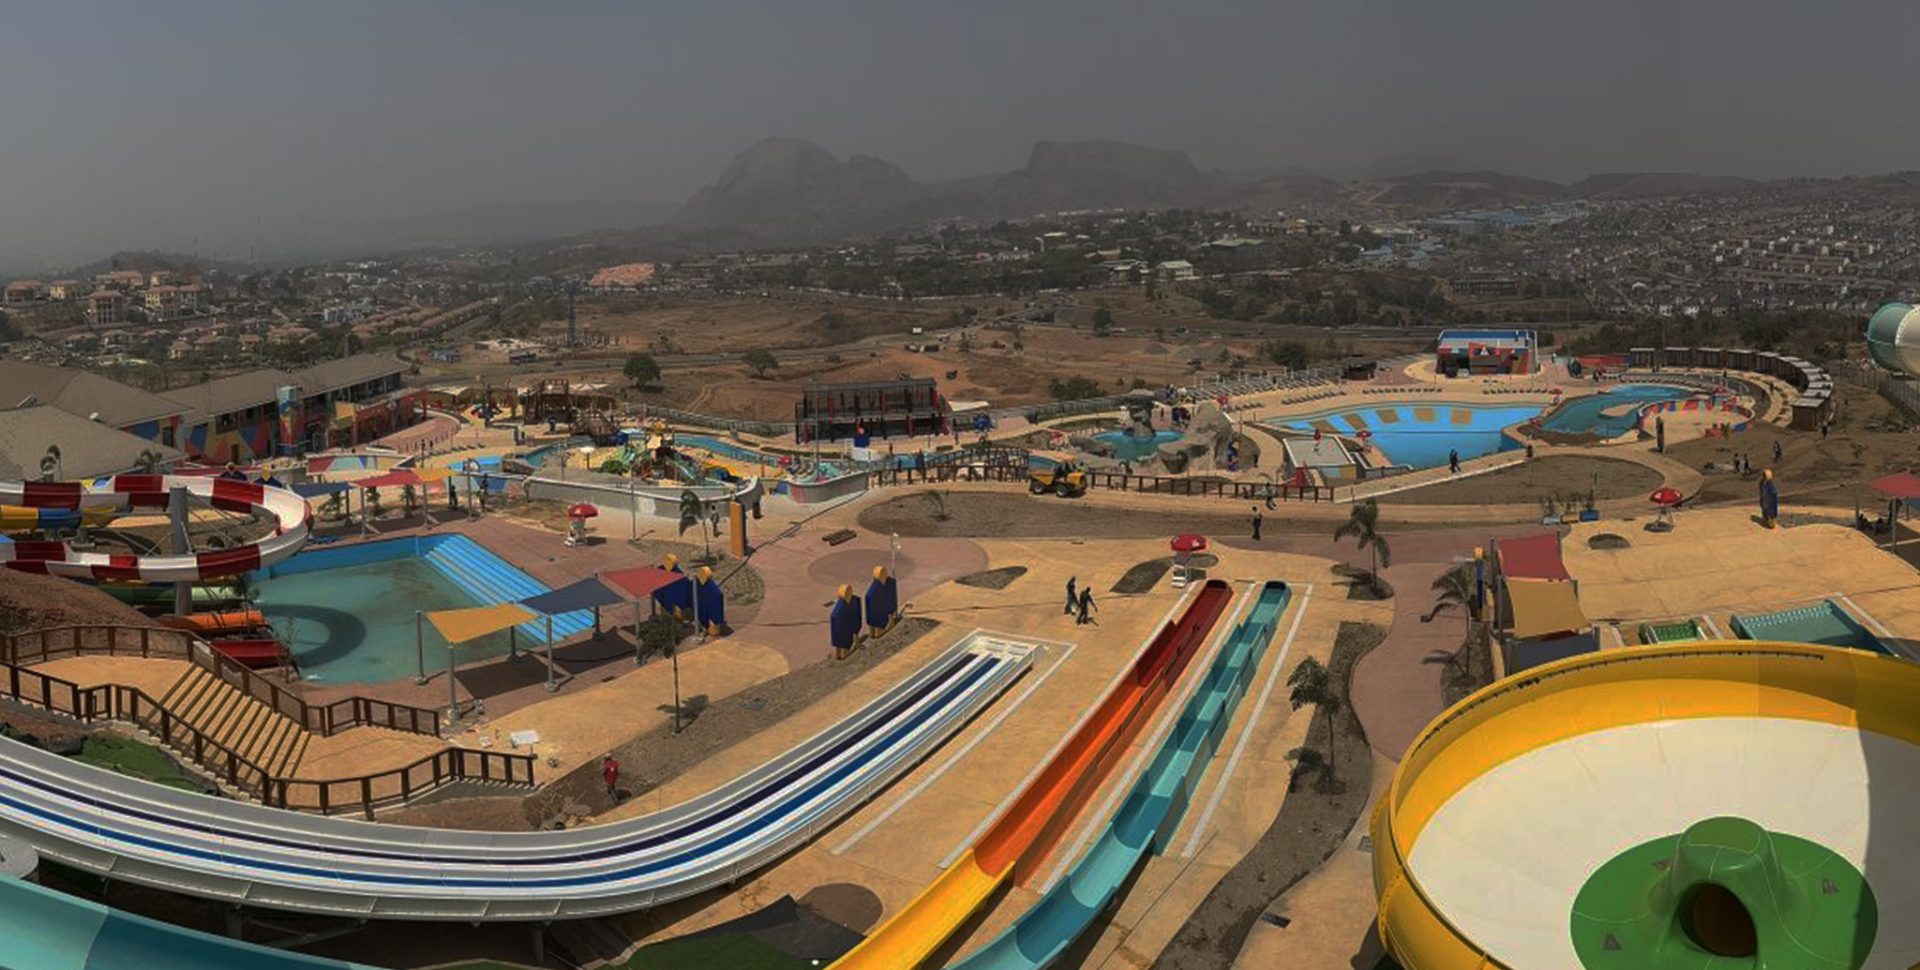 Das Sunrise Waterpark Projekt in Abuja, Nigeria